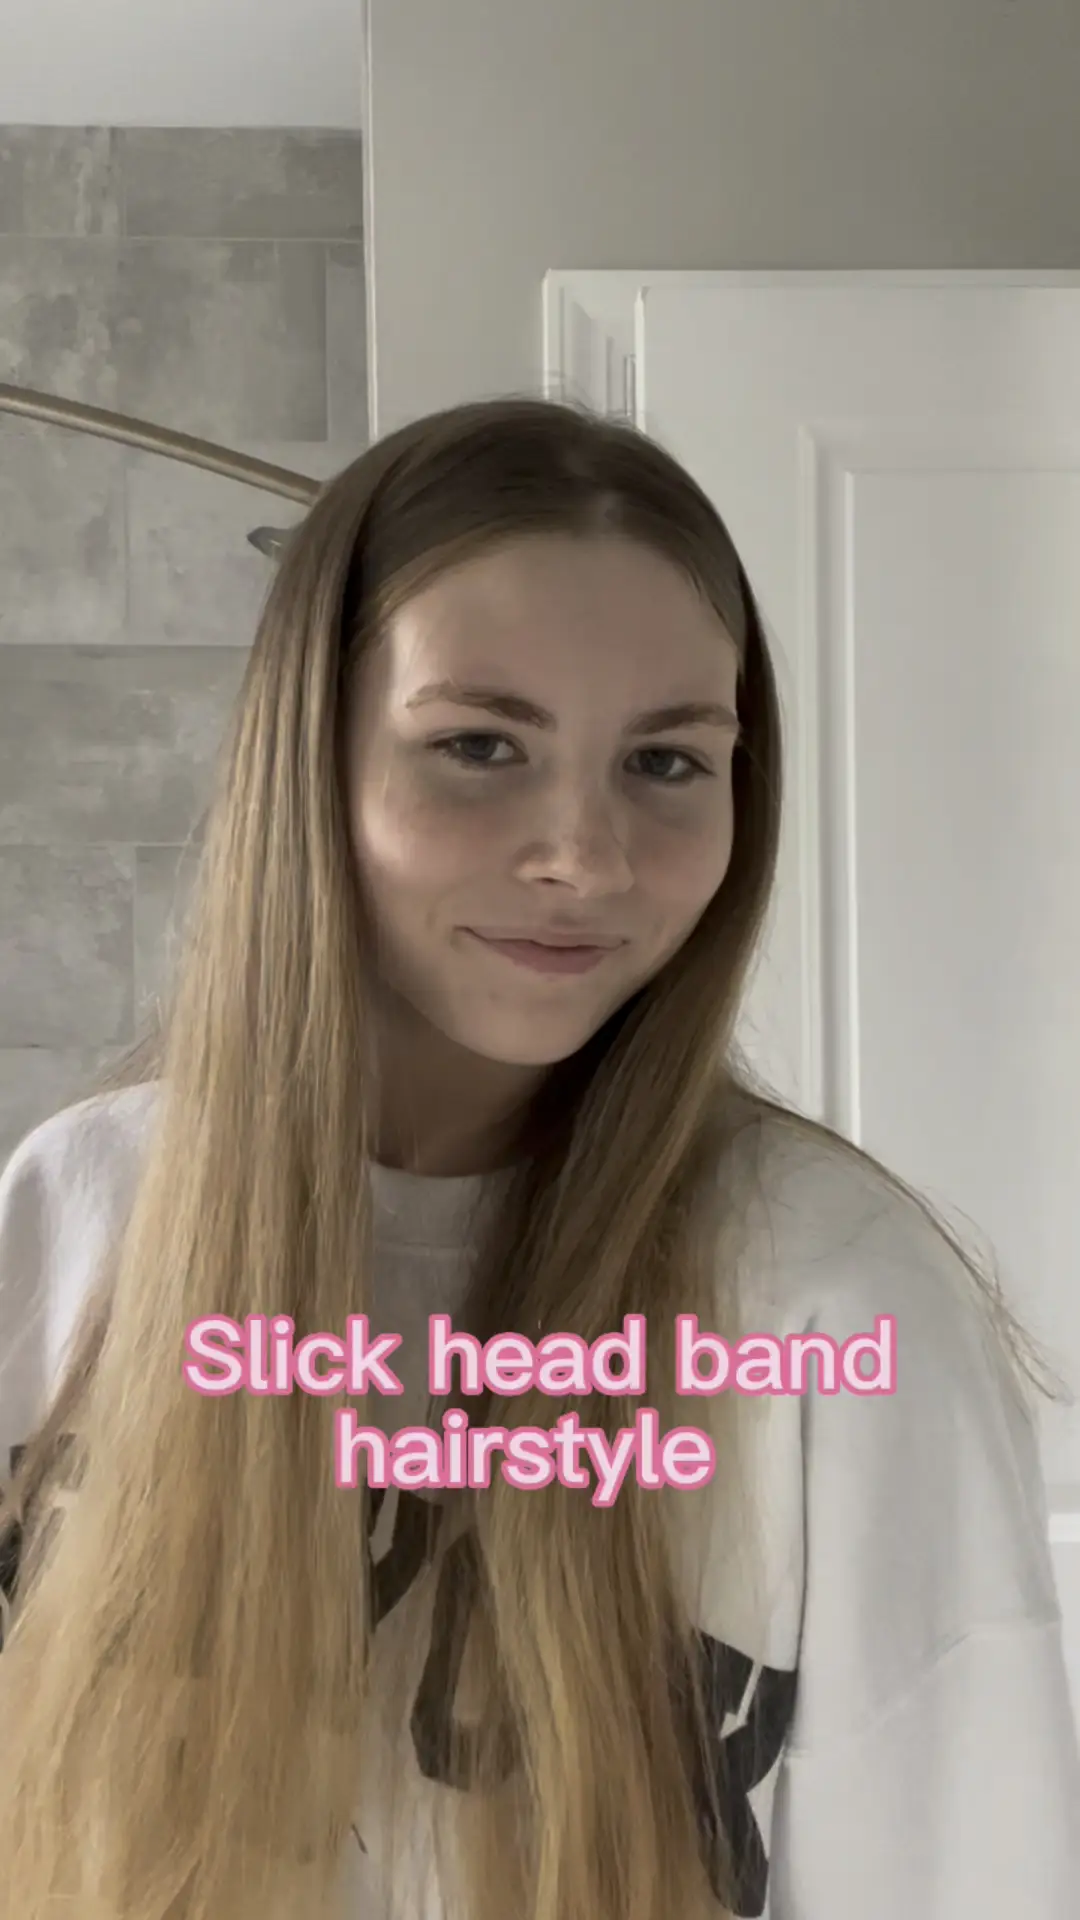 BRAIDED HEADBAND HAIRSTYLE, Video published by Alisha Kaur